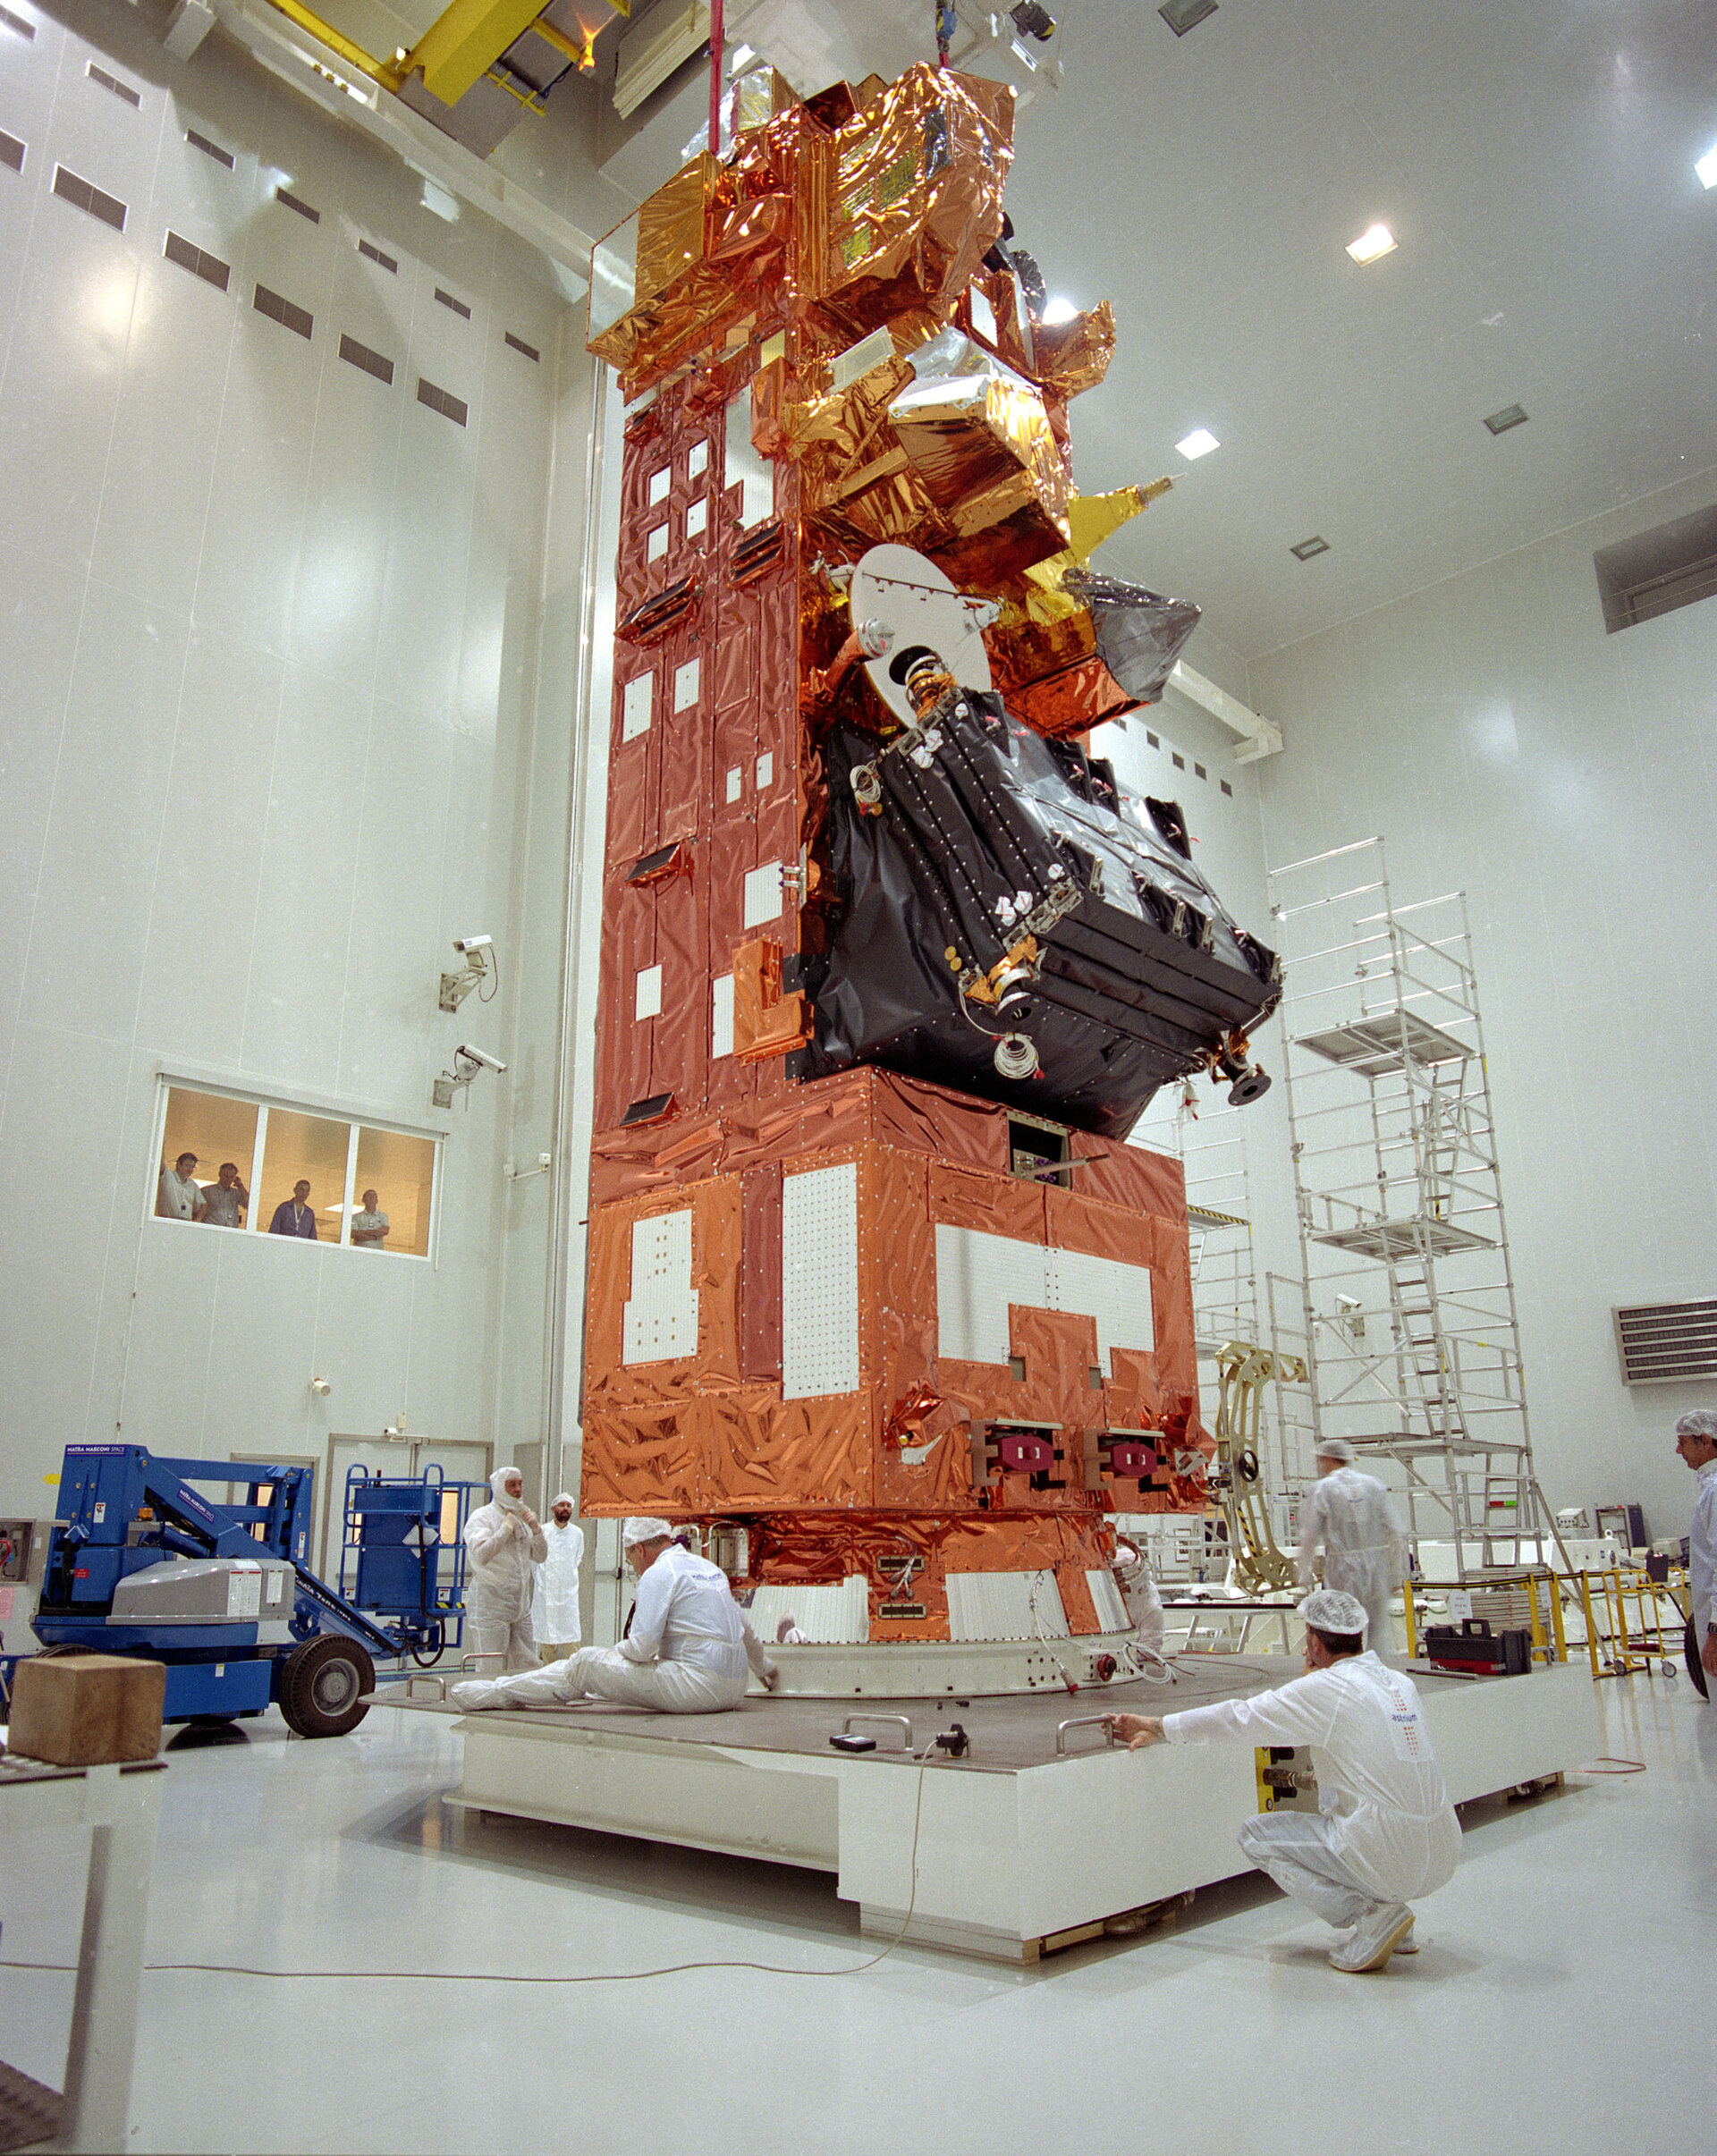 The Envisat satellite in the S5 building